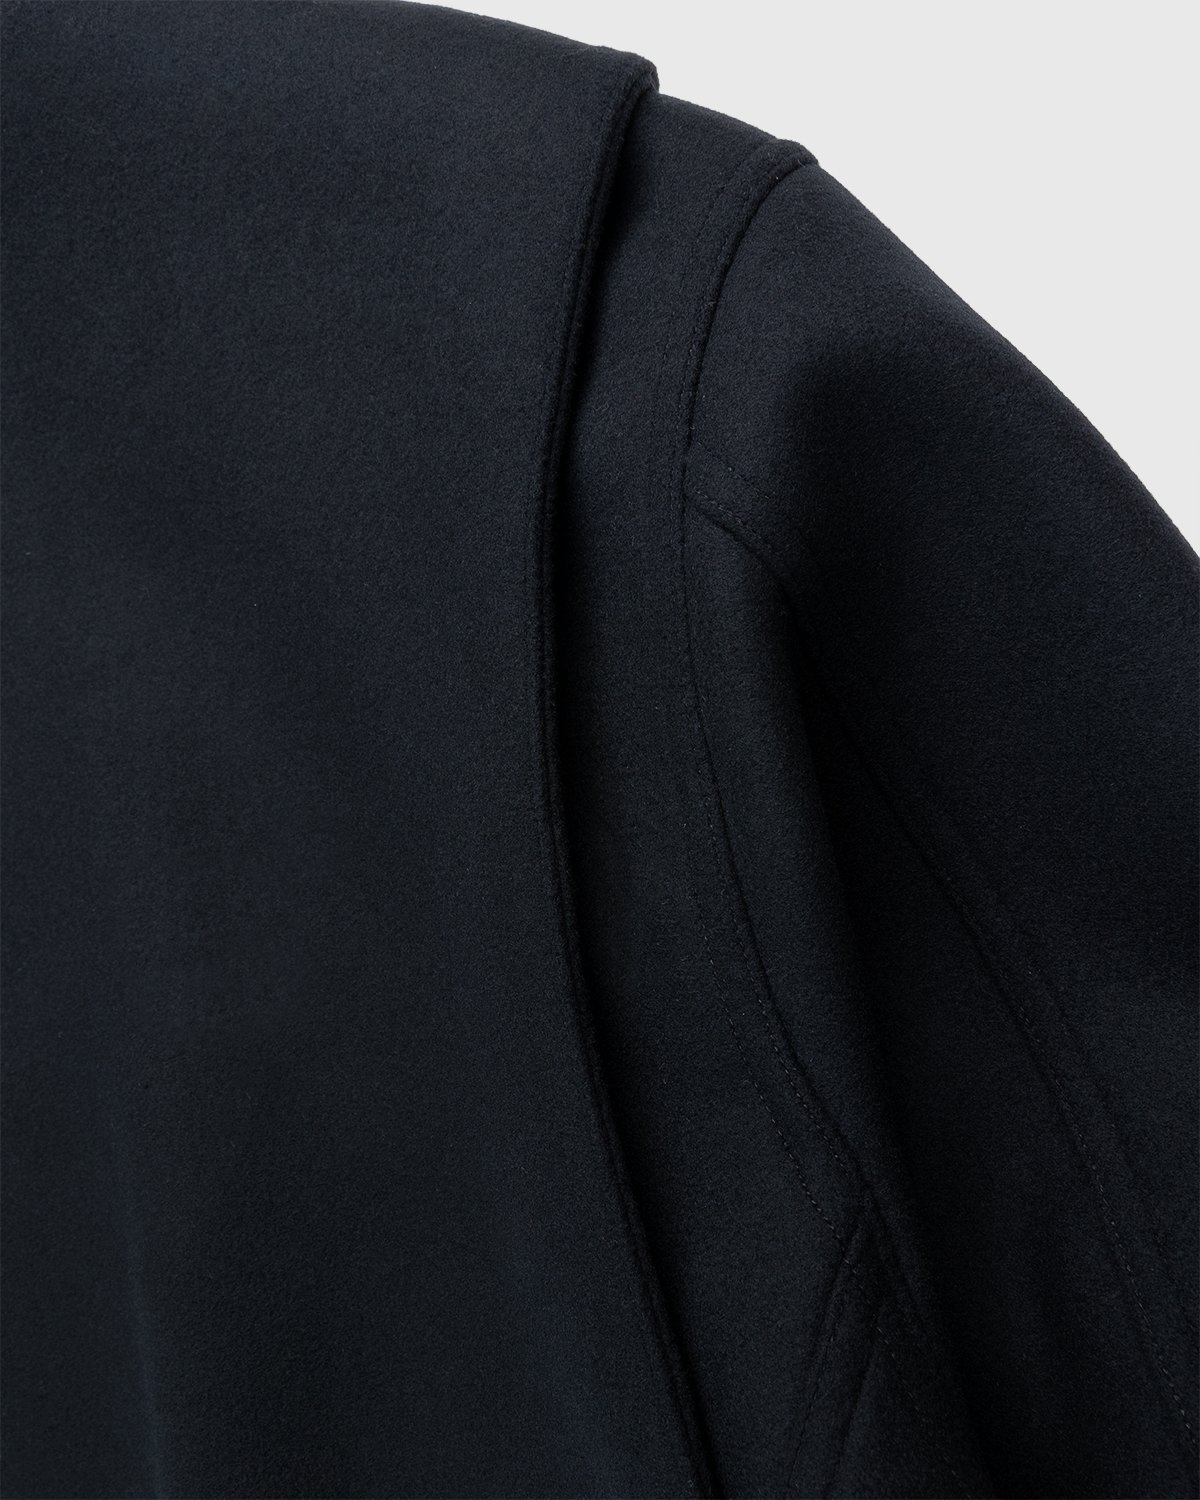 Jil Sander - Blouson Black - Clothing - Black - Image 6